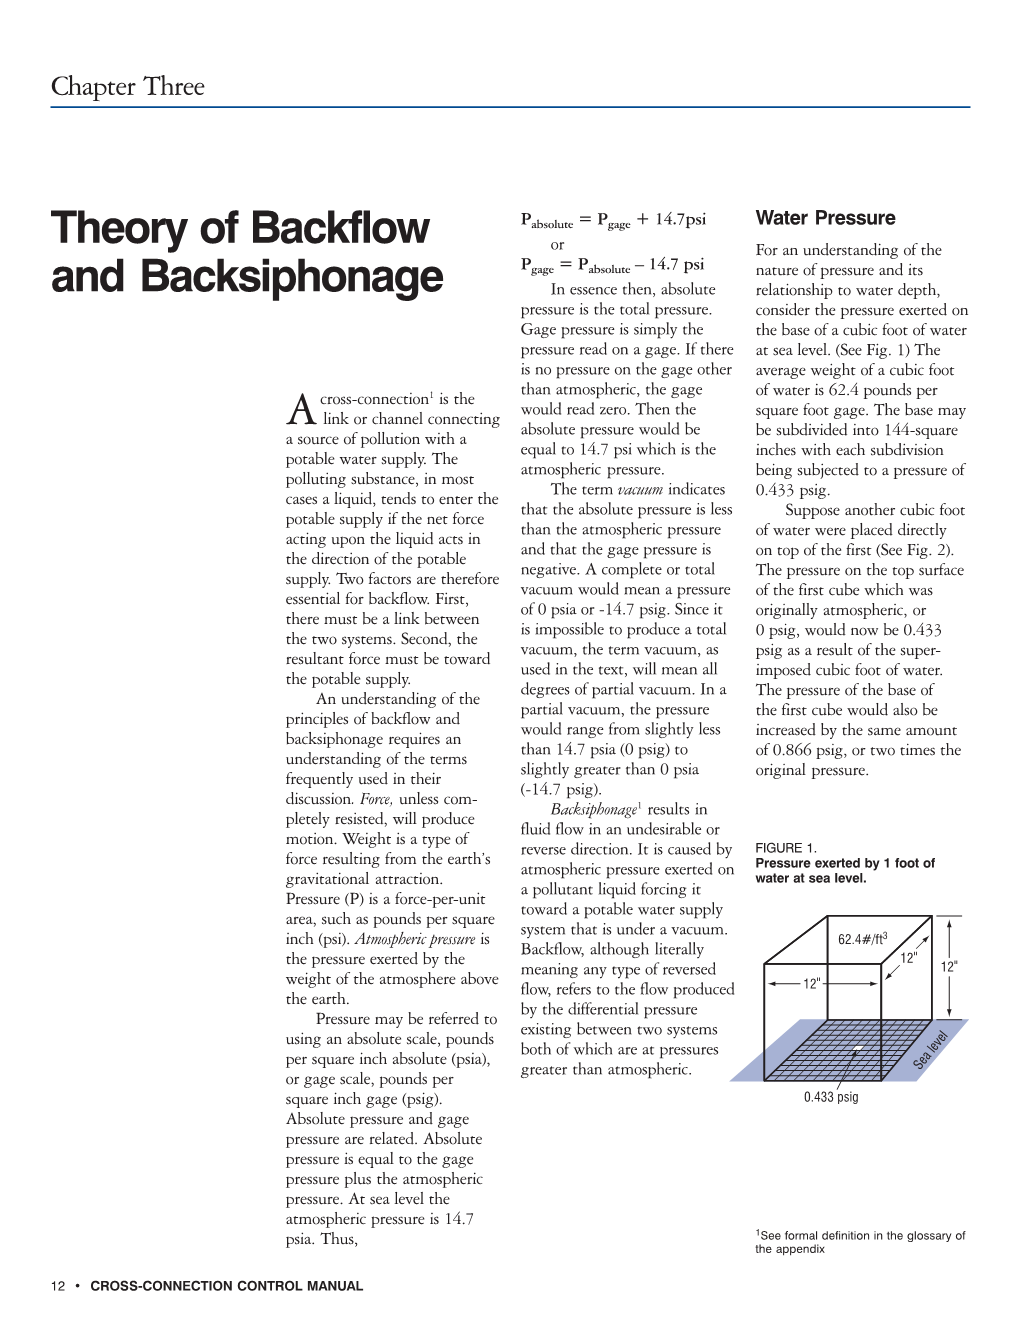 Theory of Backflow and Backsiphonage